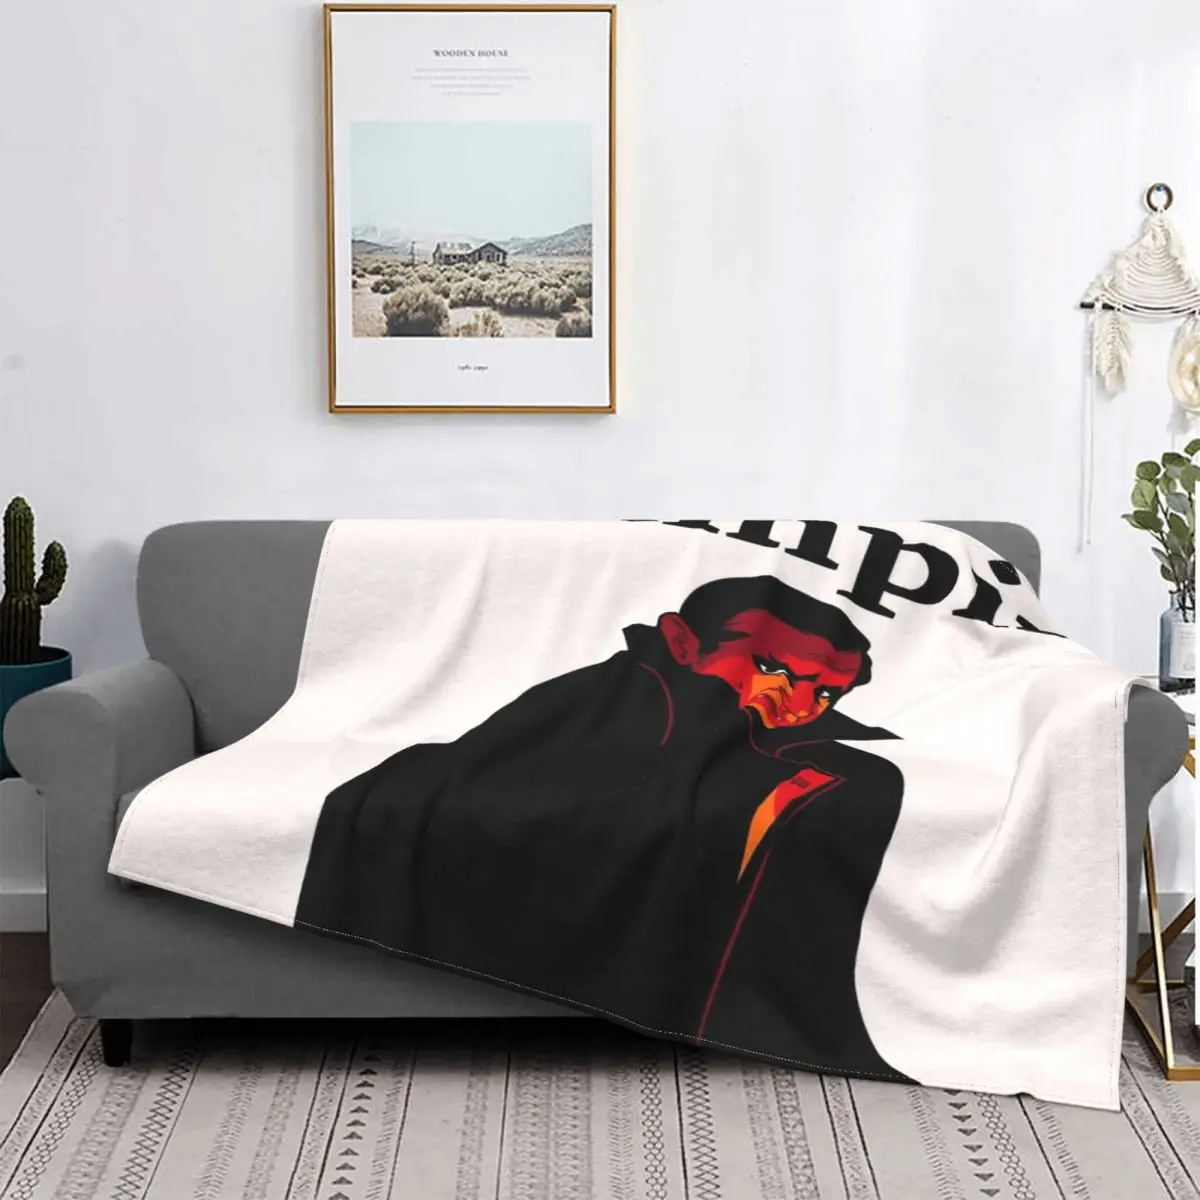 

Vampir-colcha clásica a cuadros para cama, sofá cama, manta doble mullida a cuadros, ropa de cama y fundas, 1 manta